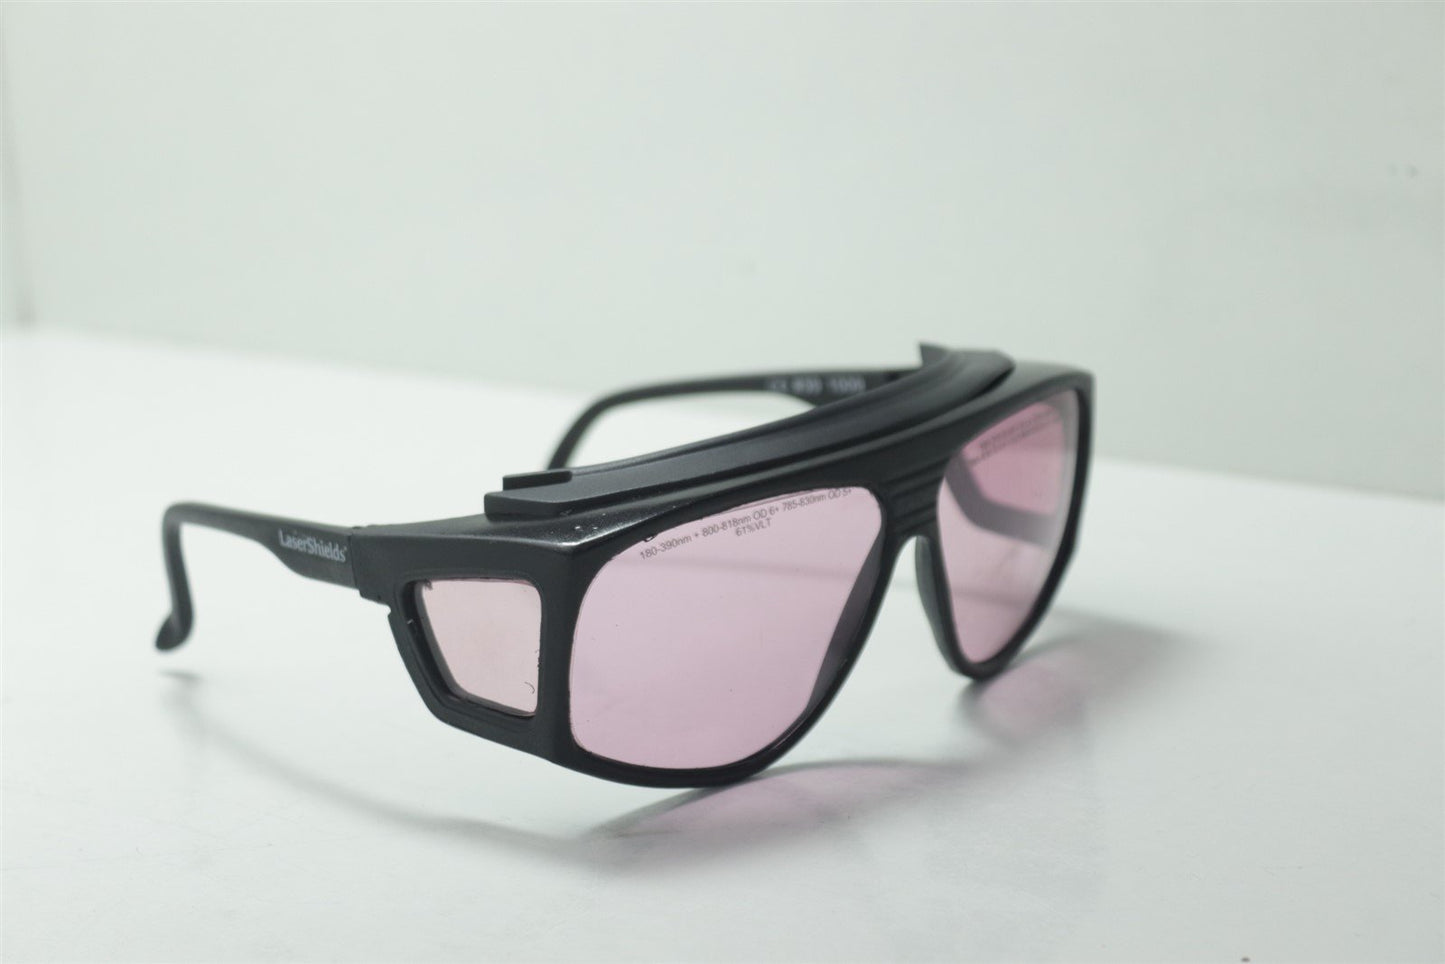 NoIR LaserShields DI2 Frame 39 790-830nm 61%LT Laser Protective Safety Glasses